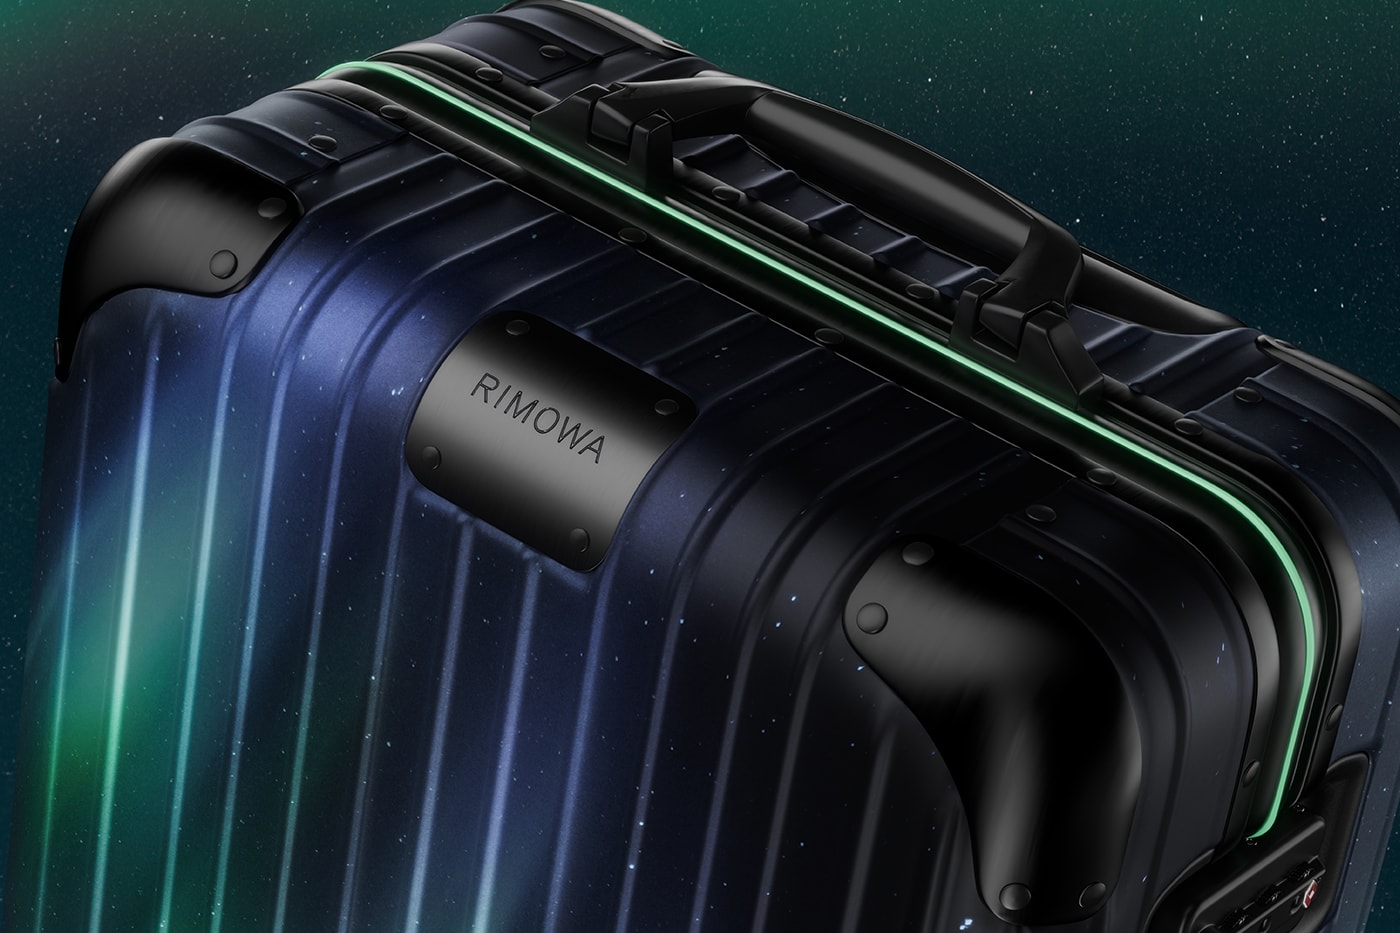 Rimowa Original Cabin Suitcase Aurora Borealis Release Info Date Buy Price 